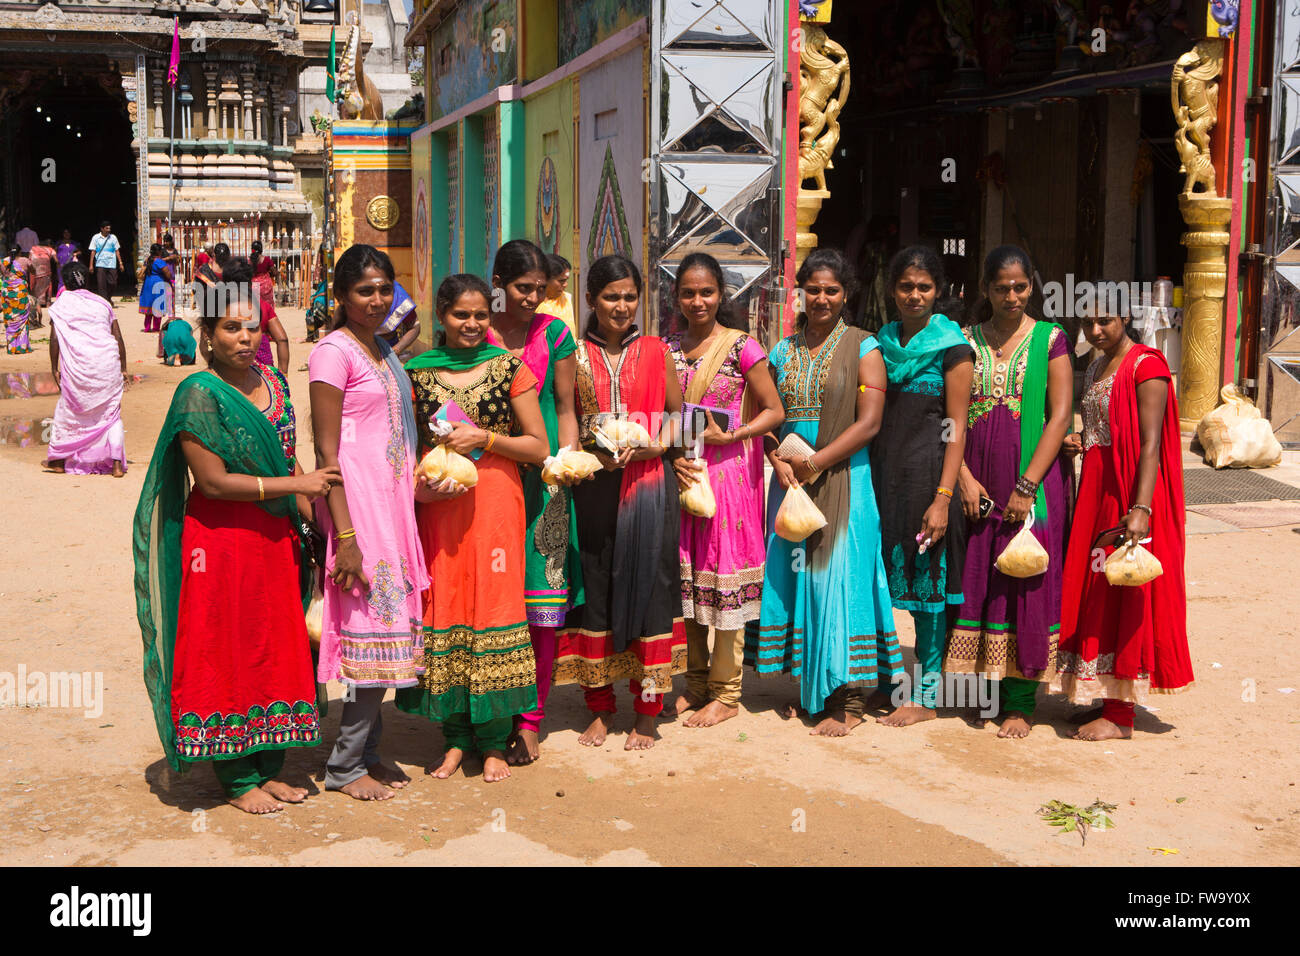 Sri Lanka, Trincomalee, Pillaiyar Kovil temple, well dressed women ...